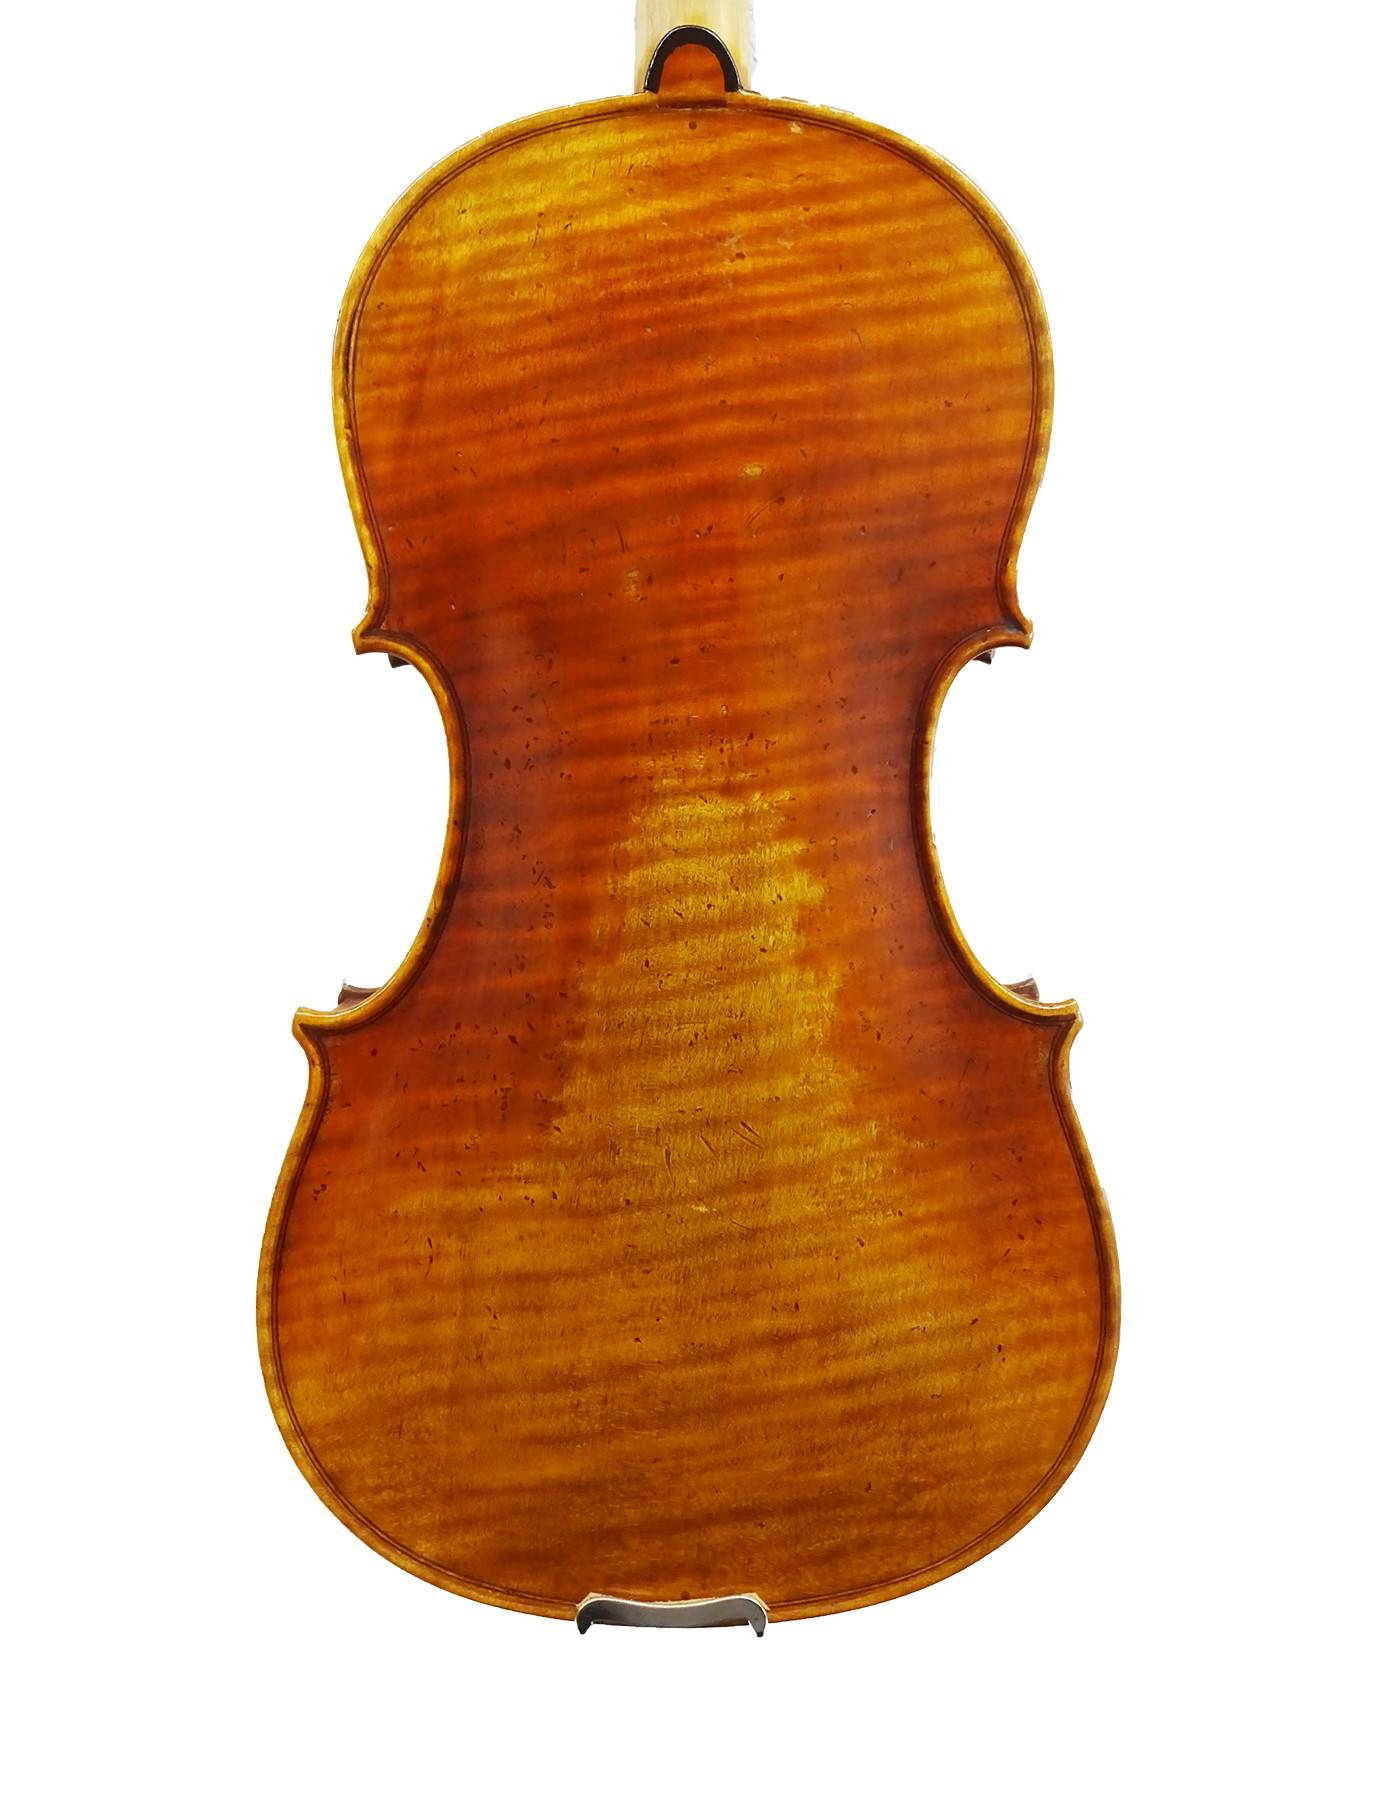 Violine "Red Mendelssohn" No. 4